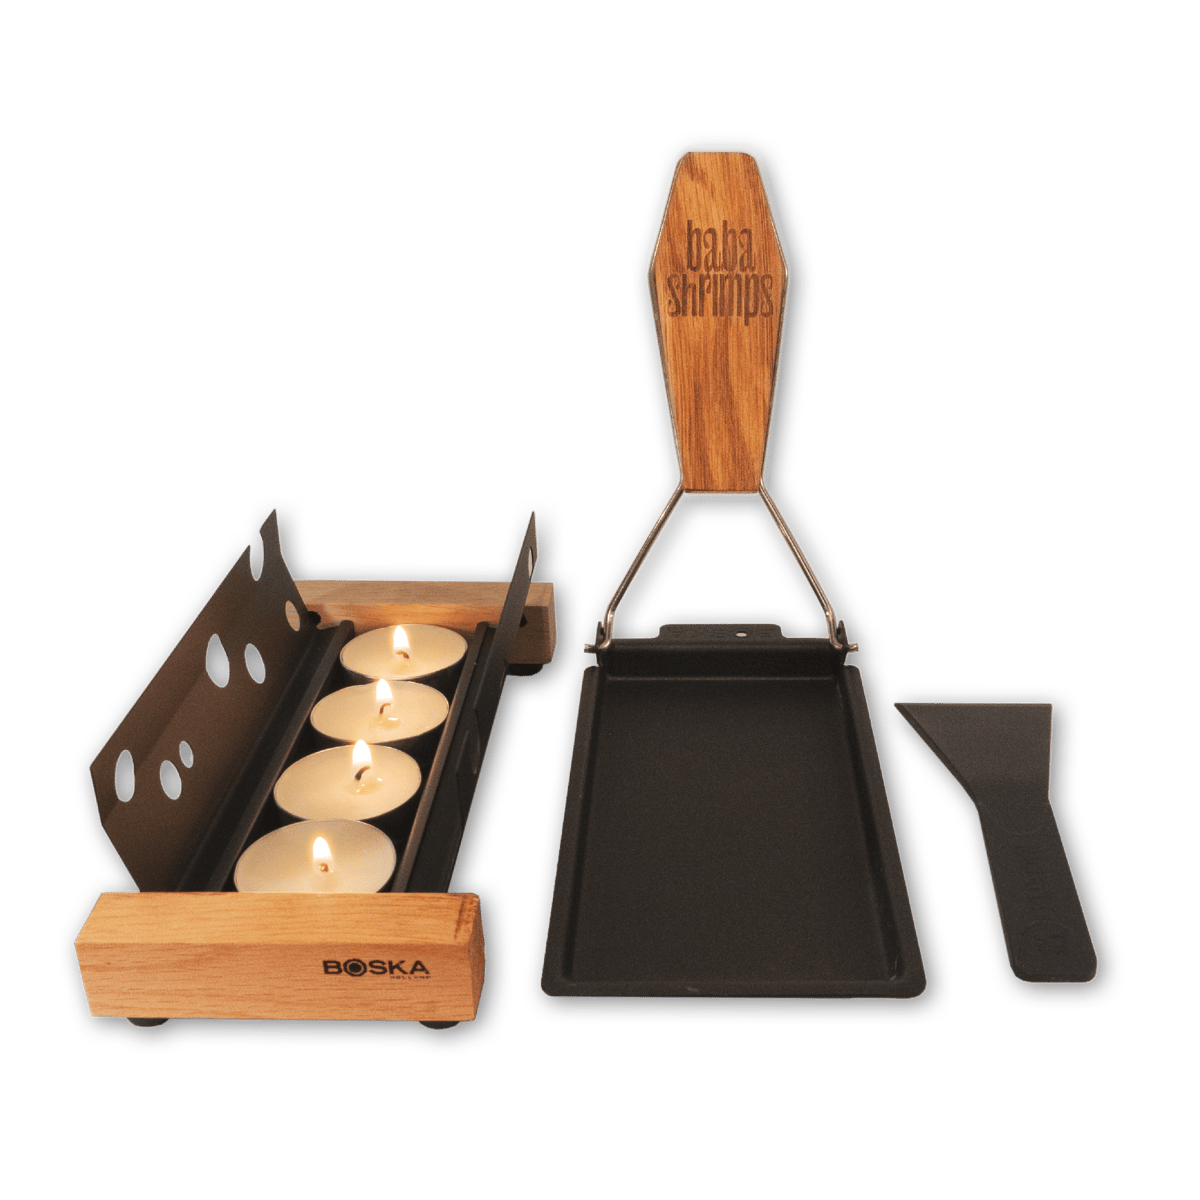 Image of Baba Shrimps Raclette Kit